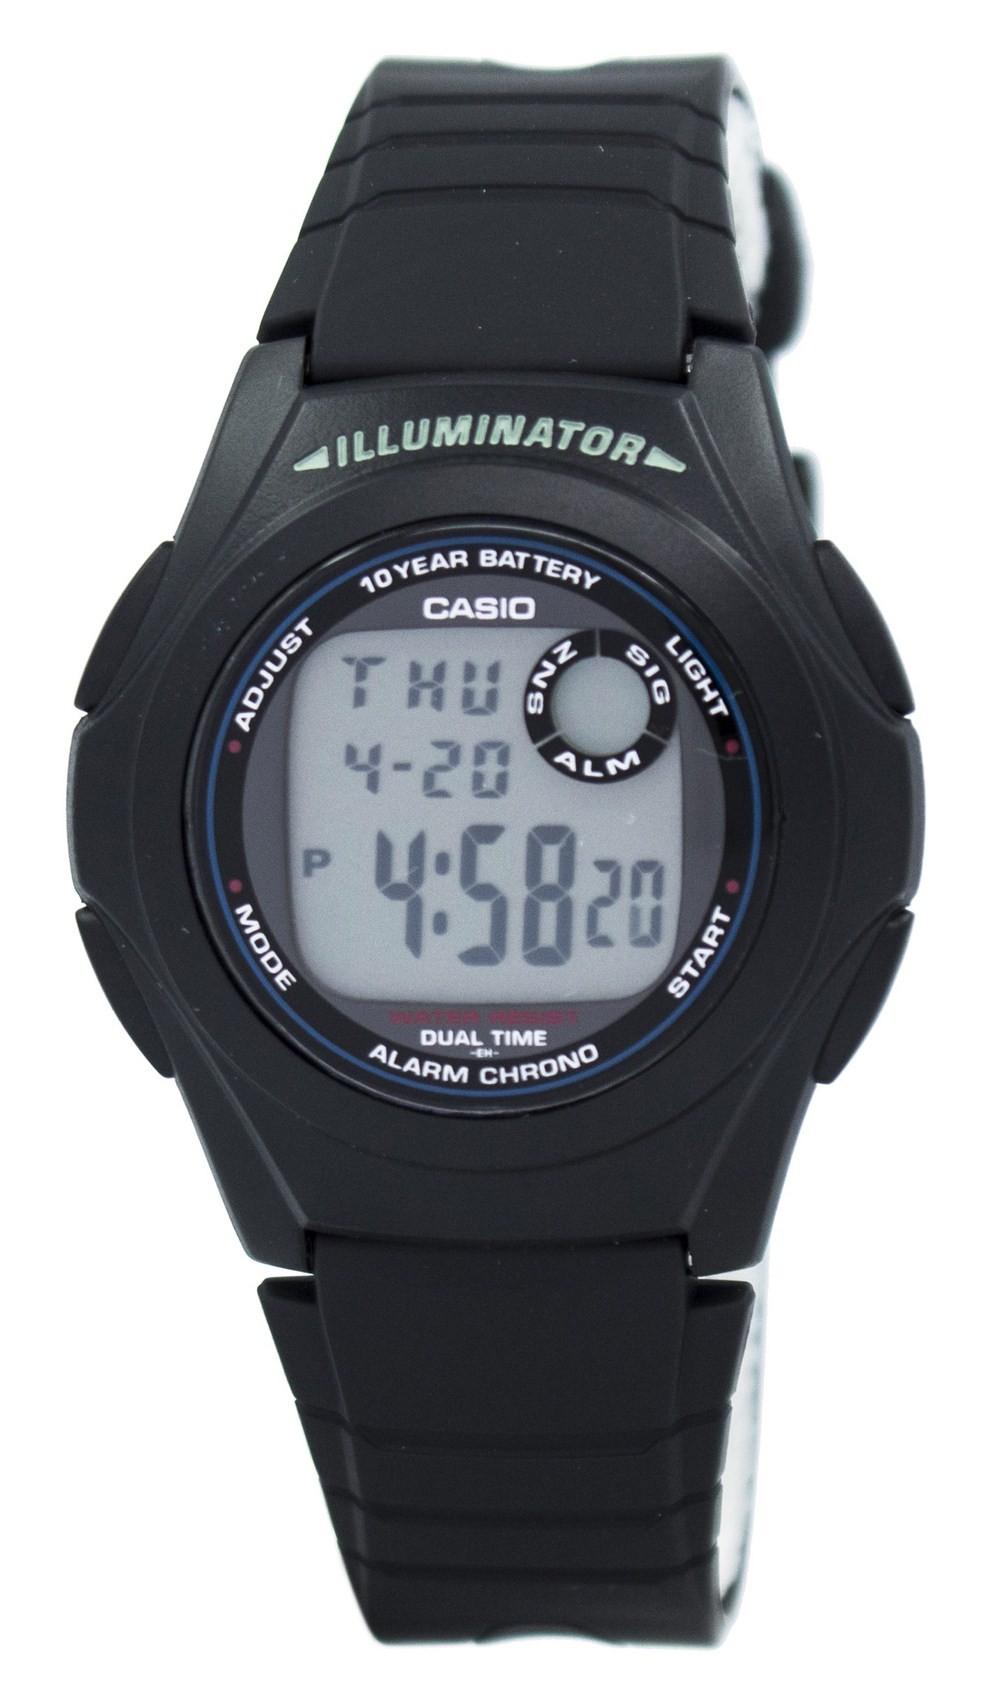 Casio Youth Illuminator Dual Time Alarm Chrono F-200W-1A F200W-1A Men's Watch